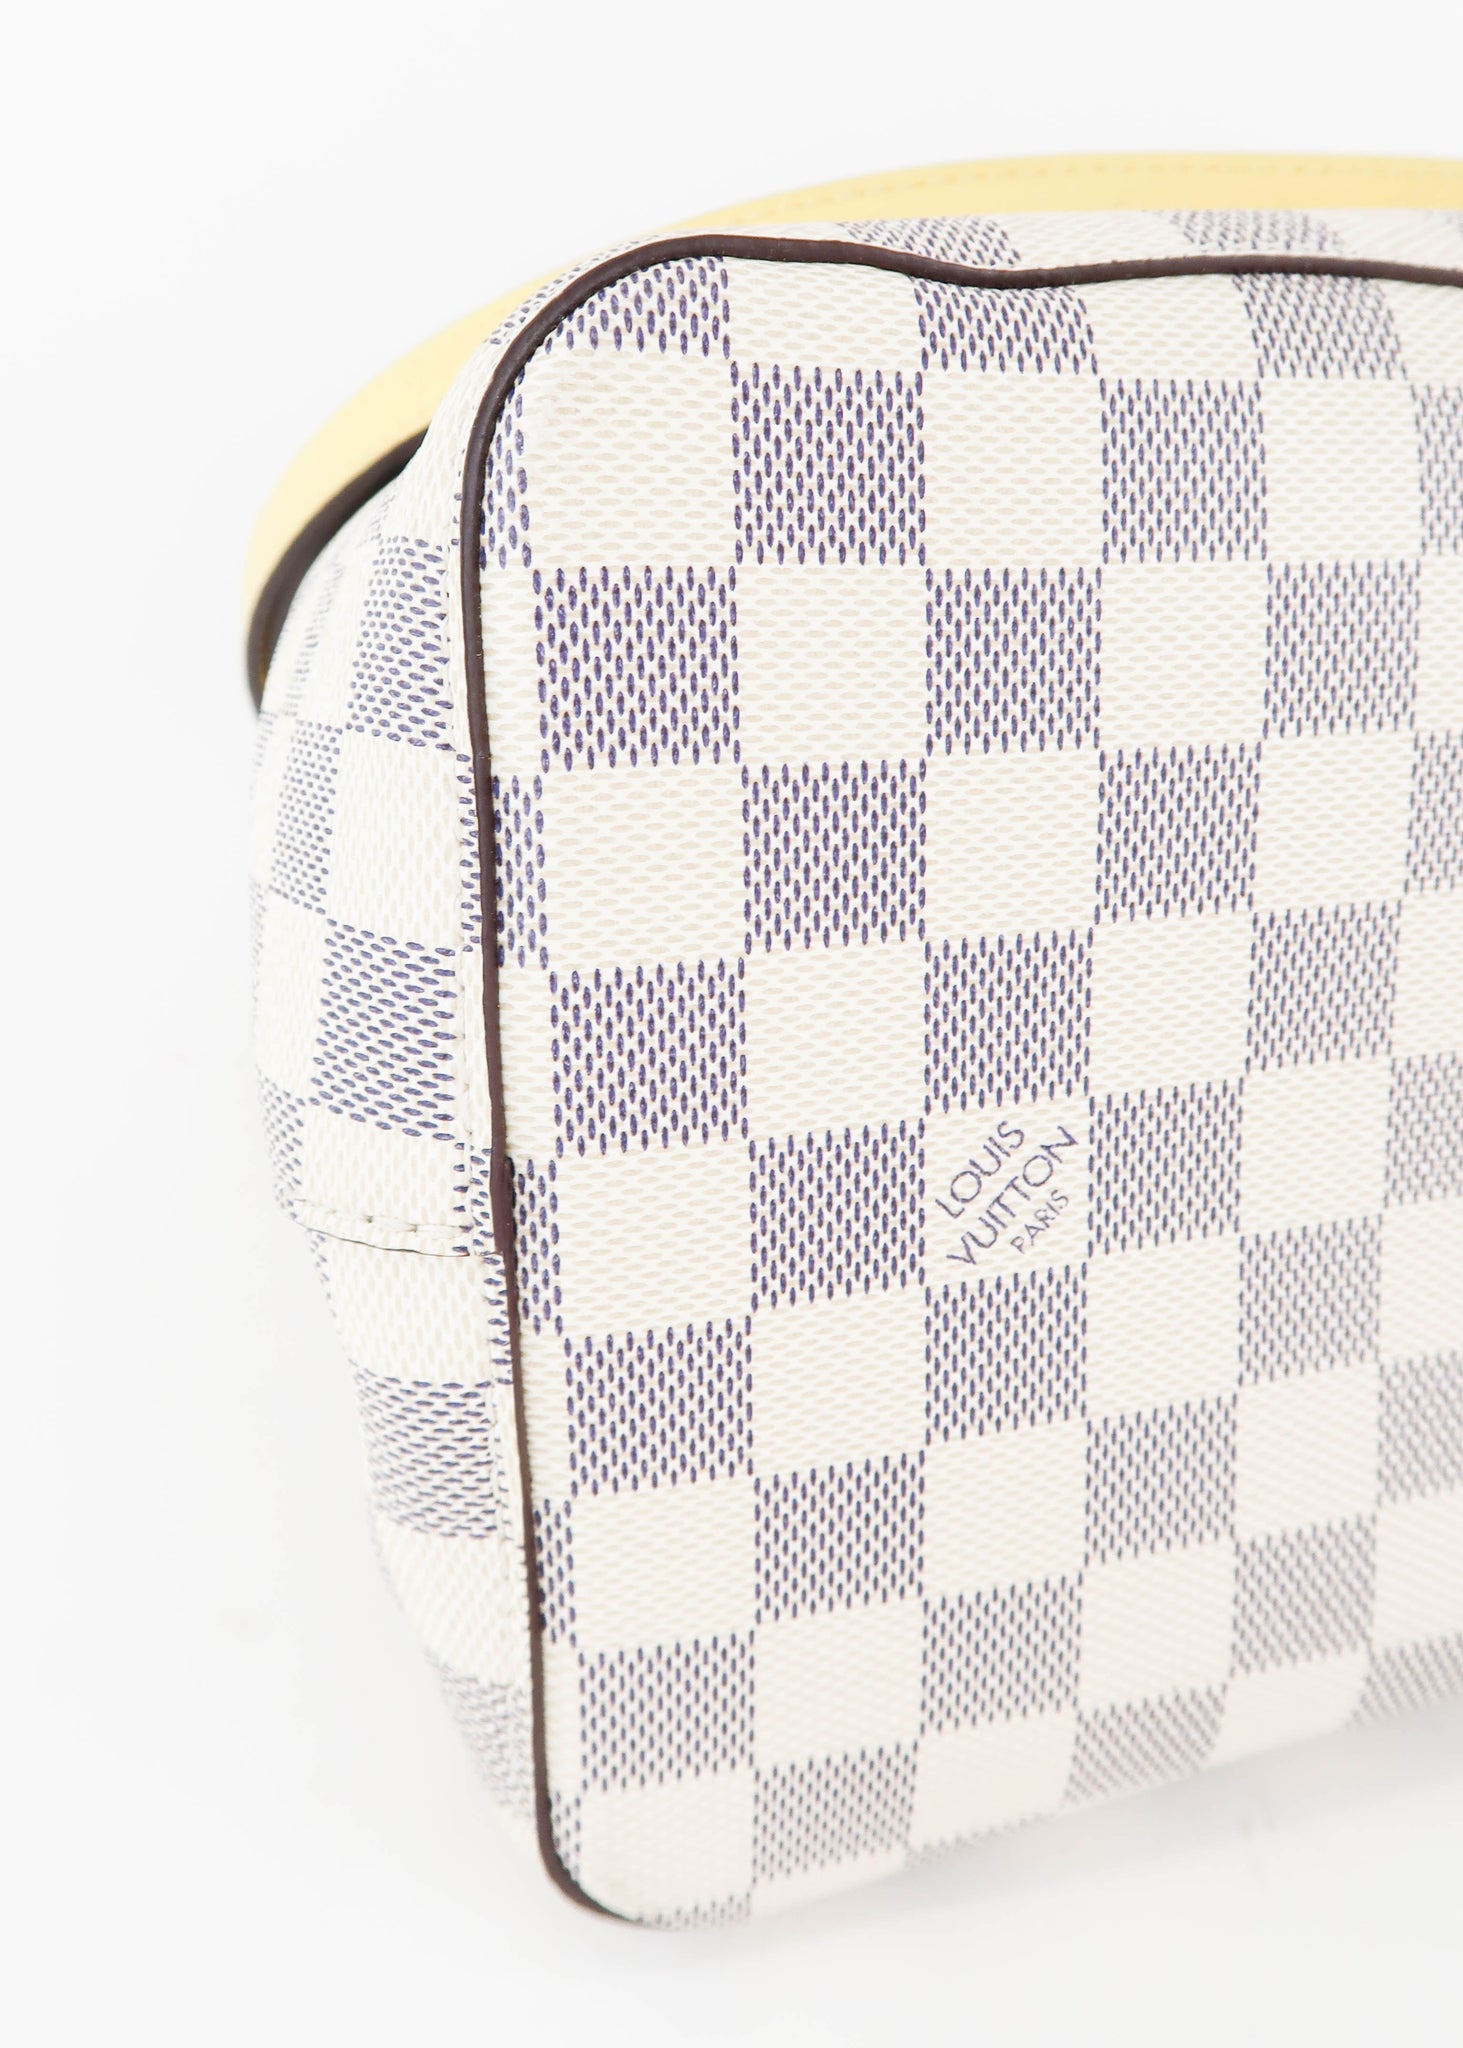 Louis Vuitton Neonoe N40151 Damier Azur Pineapple Yellow Shoulder Bag  Ladies